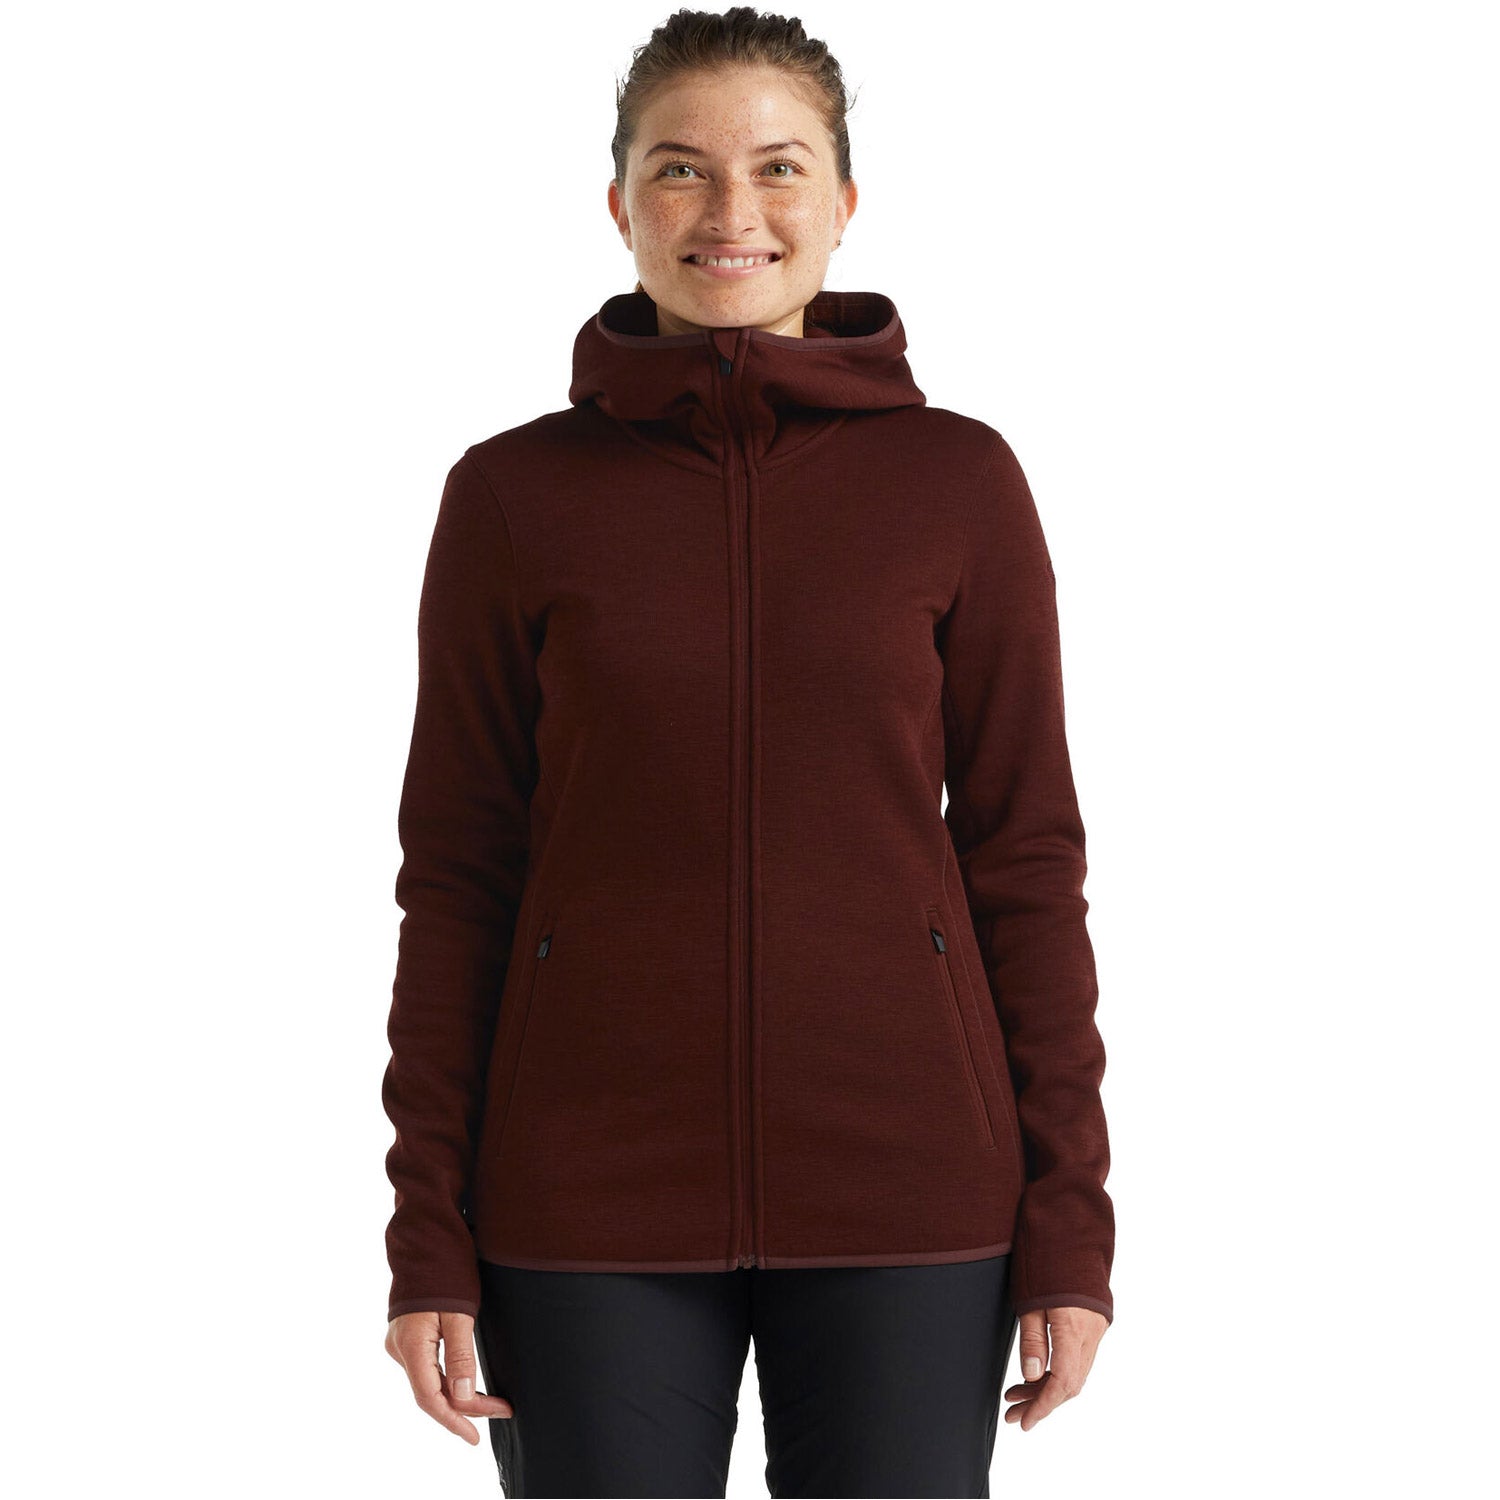 Women's RealFleece Merino Elemental Long Sleeve Zip Hood Jacket